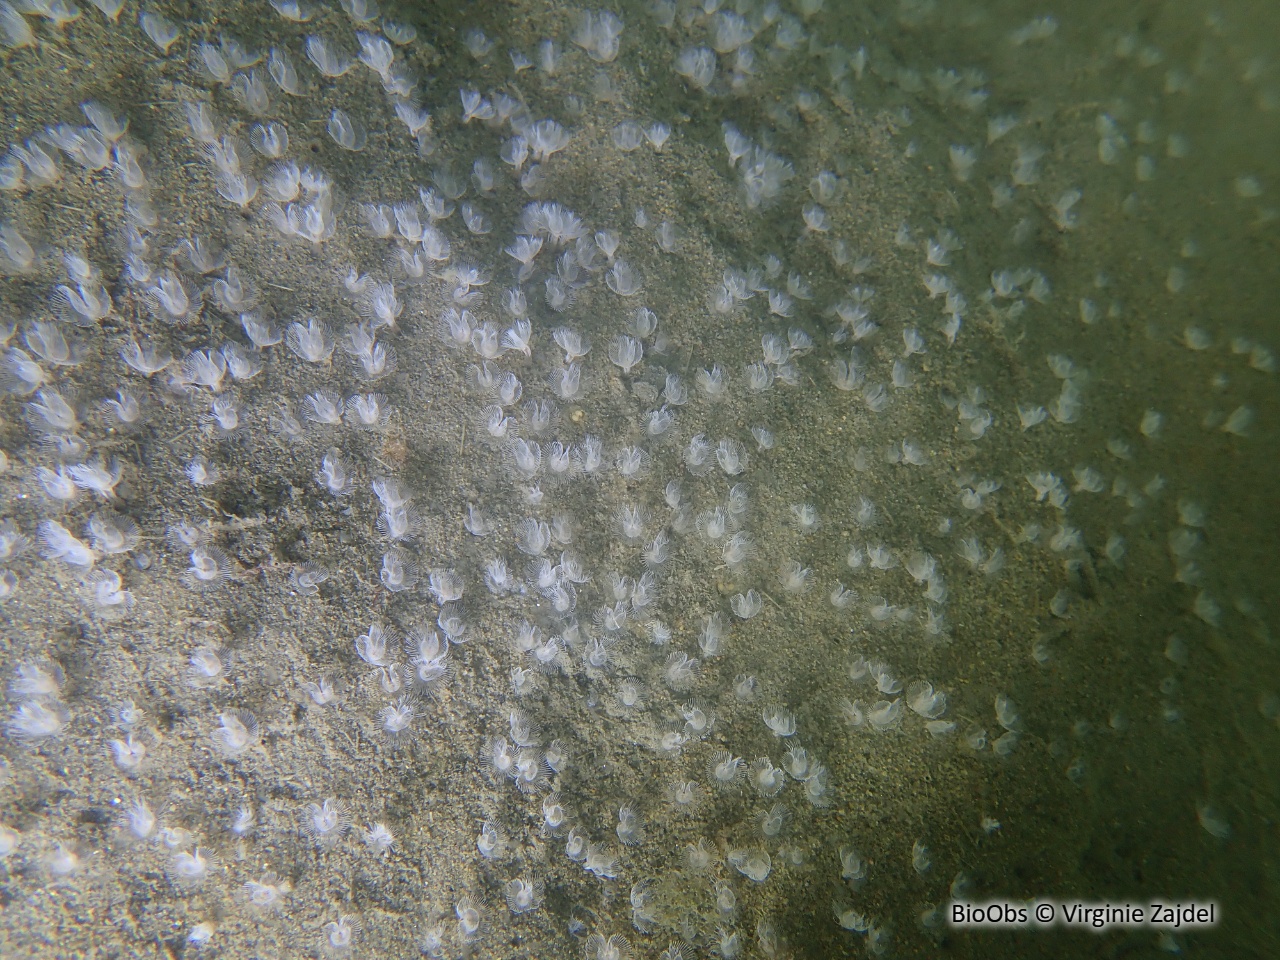 Petit phoronidien de sable - Phoronis psammophila - Virginie Zajdel - BioObs